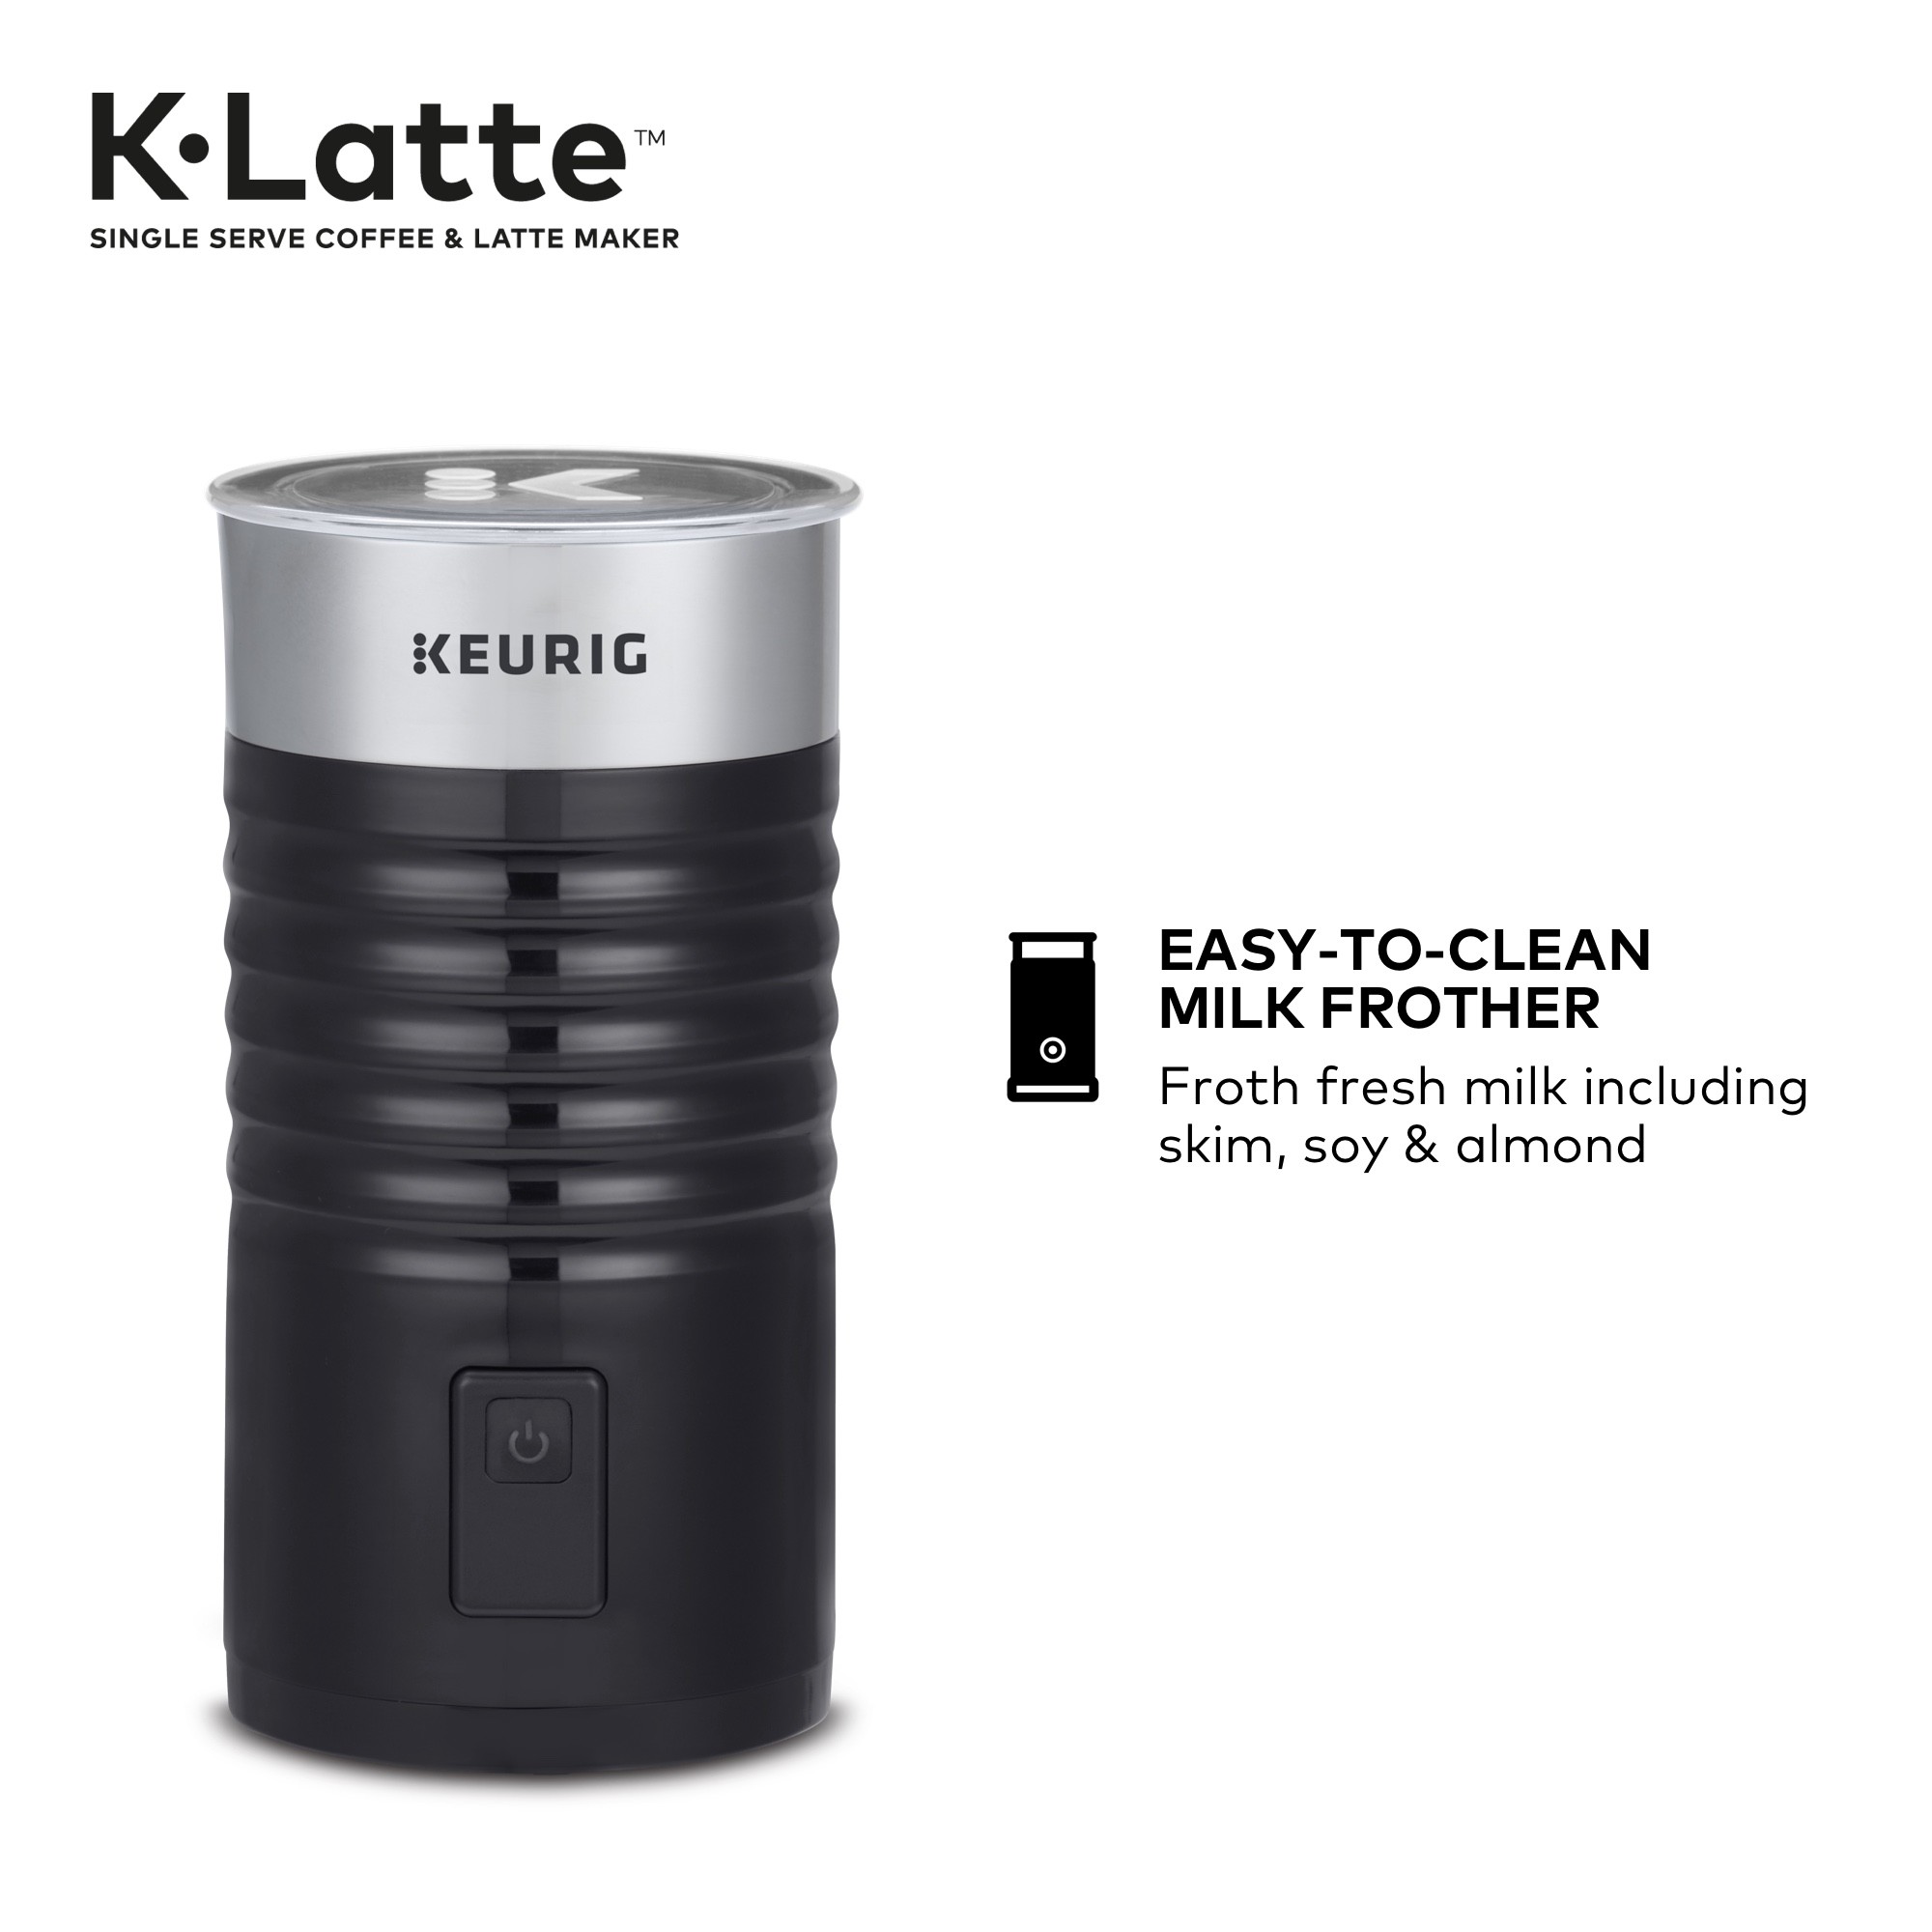 Keurig K-Latte Single Serve K-Cup Coffee and Latte Maker, Black - image 5 of 12